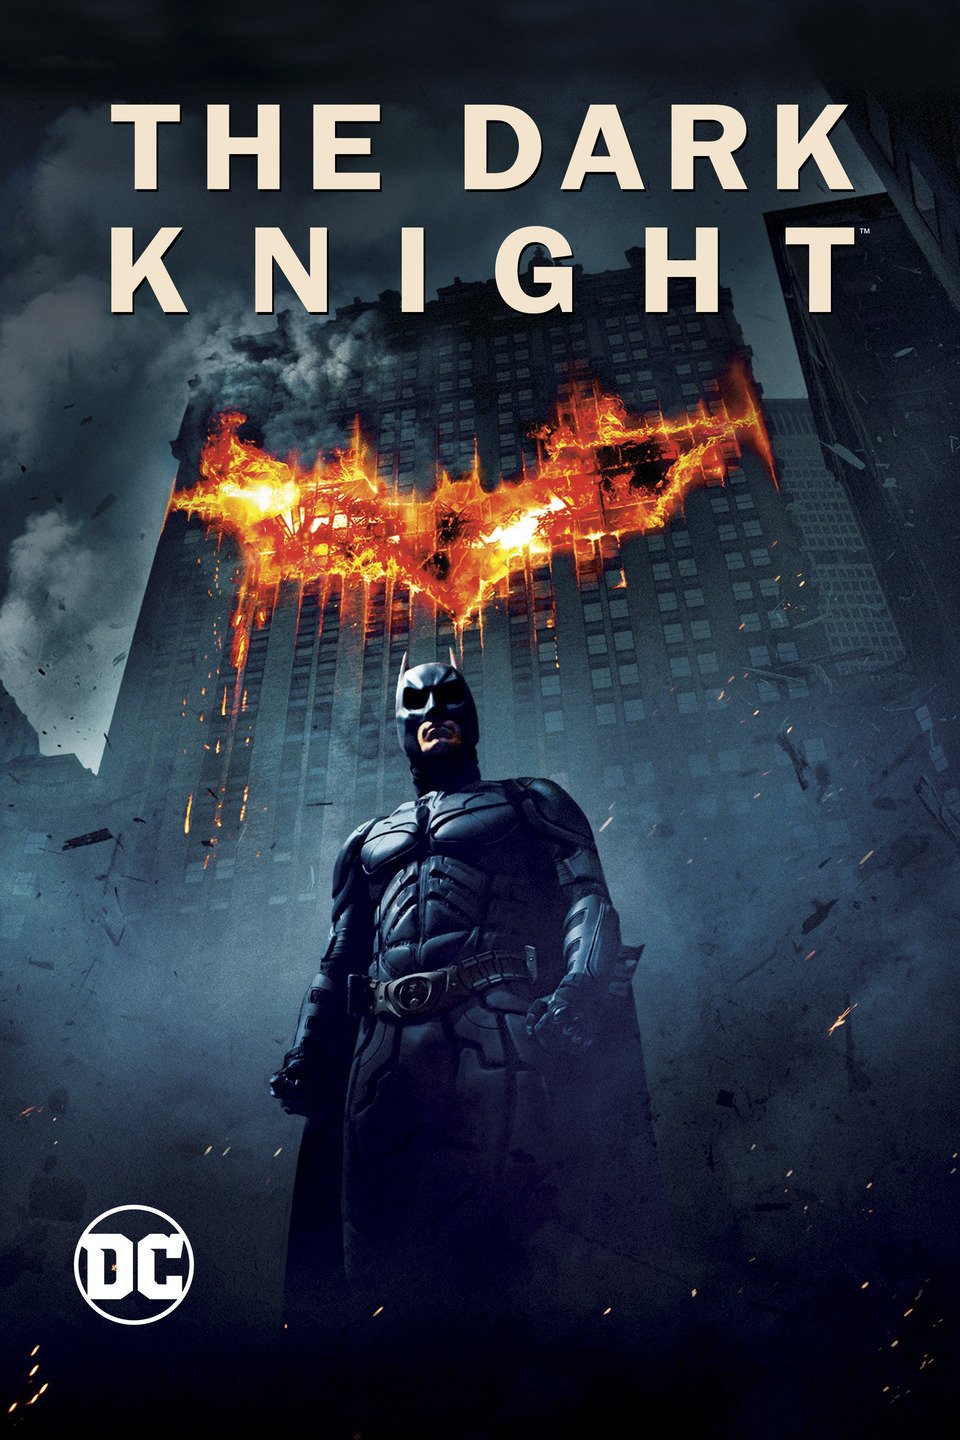 The Dark Knight 2008 (DC Films)